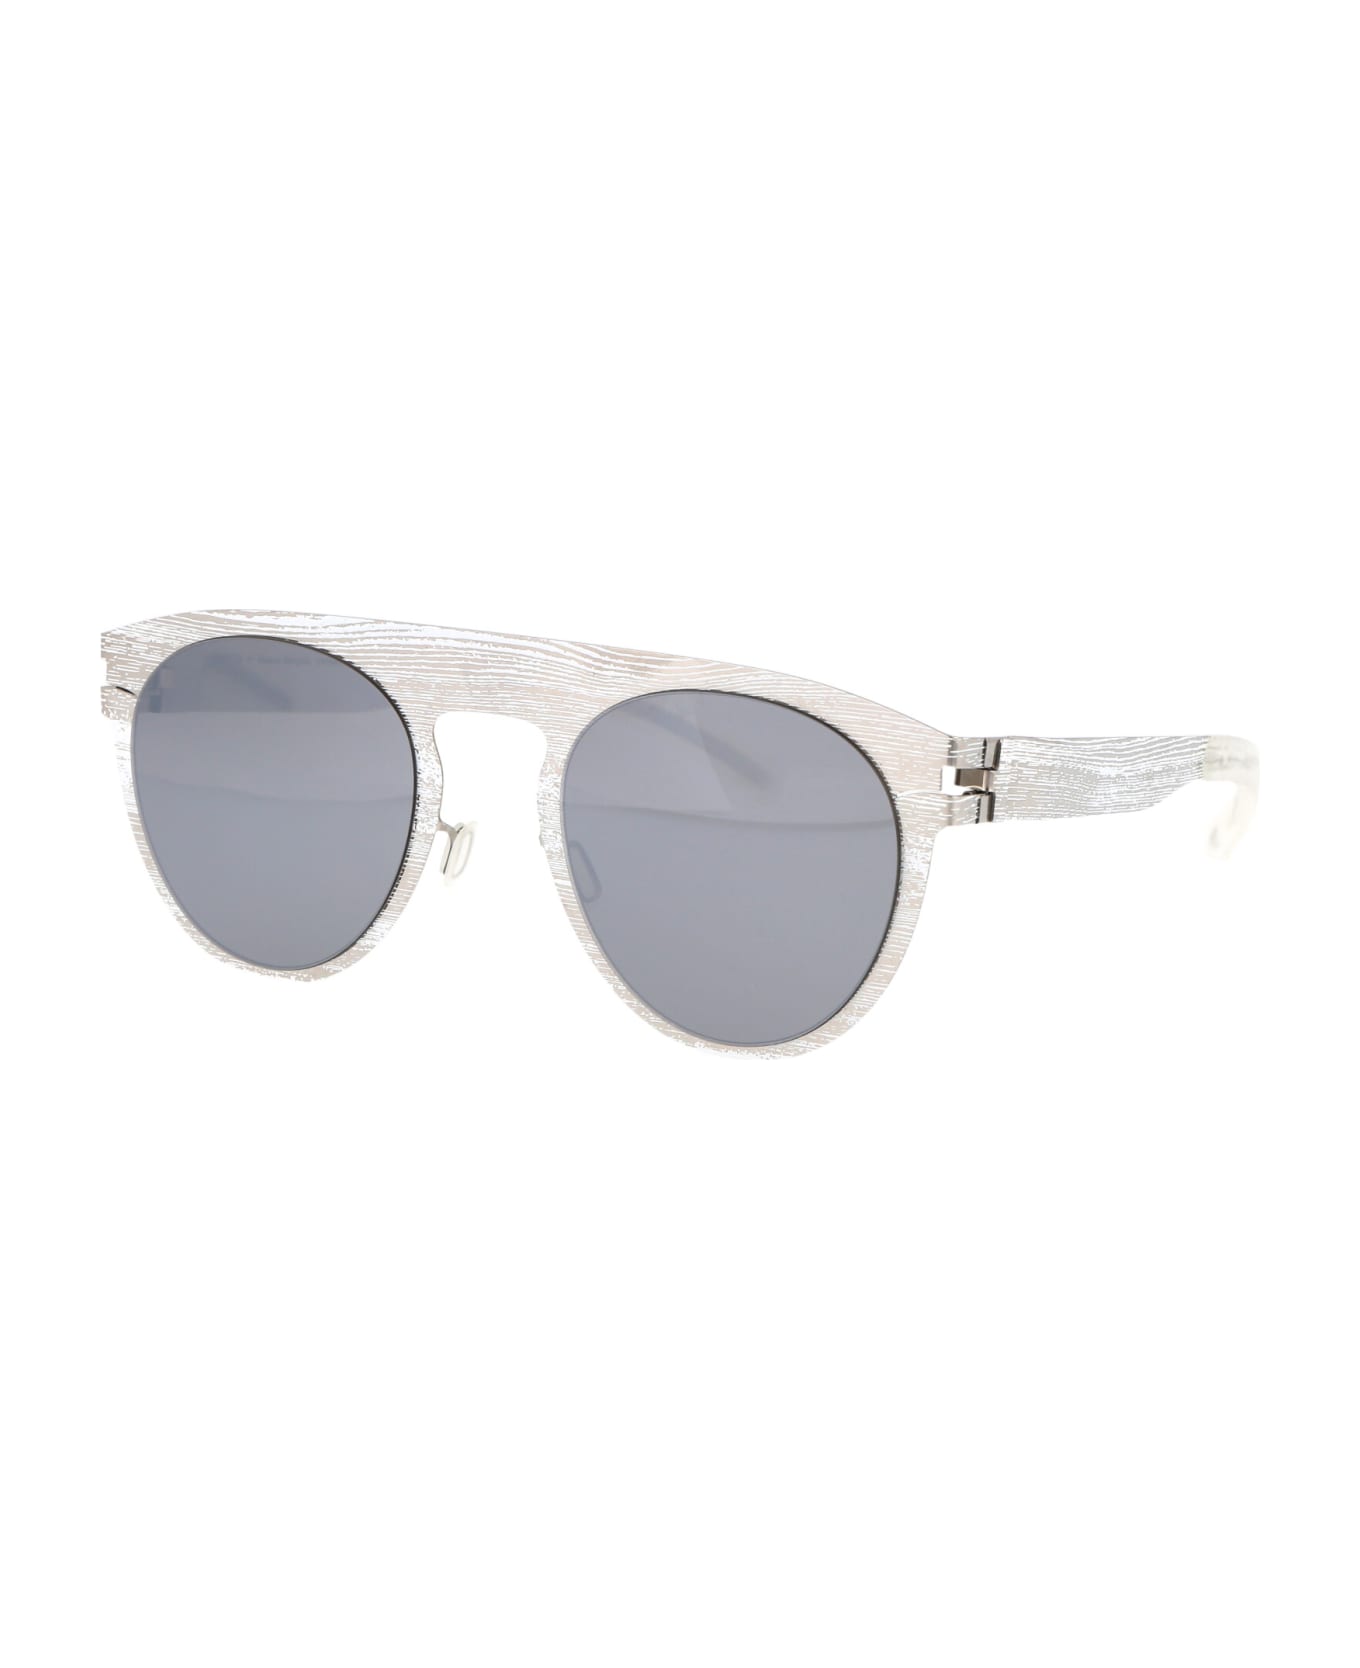 Mykita Mmtransfer004 Sunglasses - 354 Silver White Pine Brown Flash